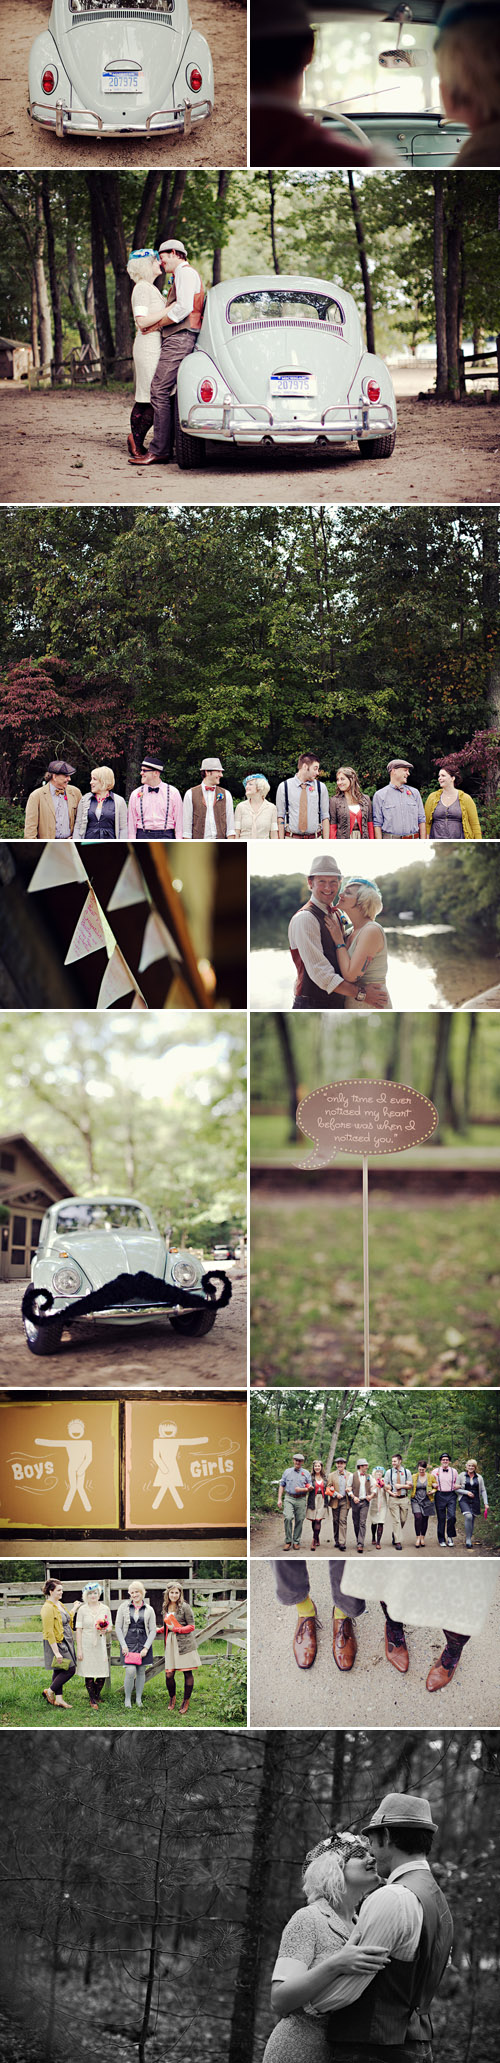 vintage summer camp inspired wedding in Michigan, creative alternative wedding photos by Kat Braman